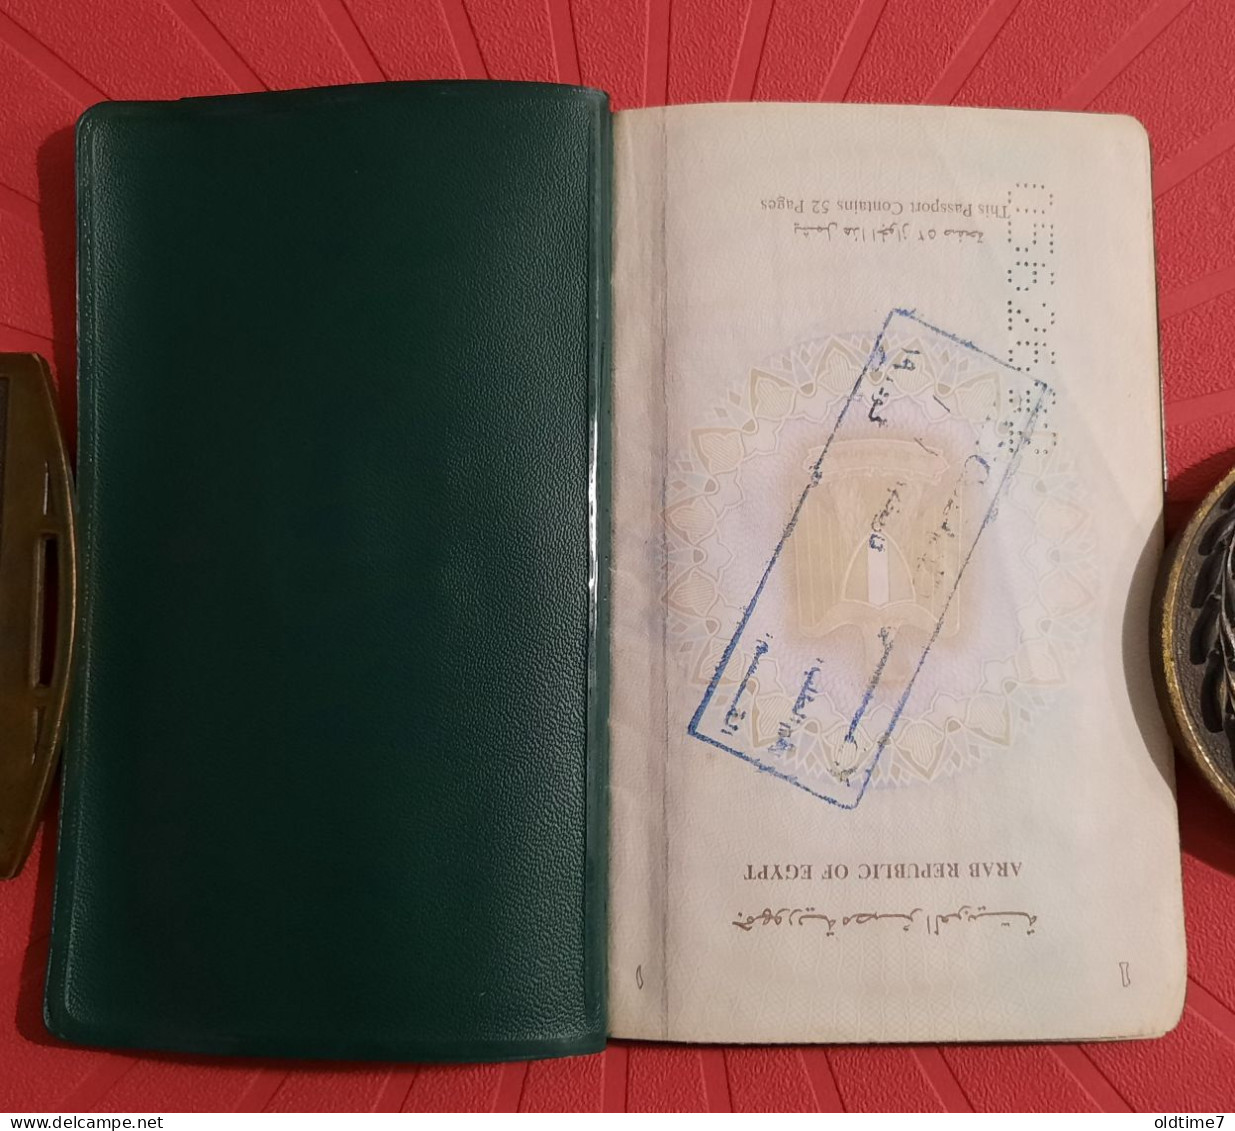 Egypt Passport,  Pasaporte, Passeport, Reisepass 2005 - Historische Dokumente